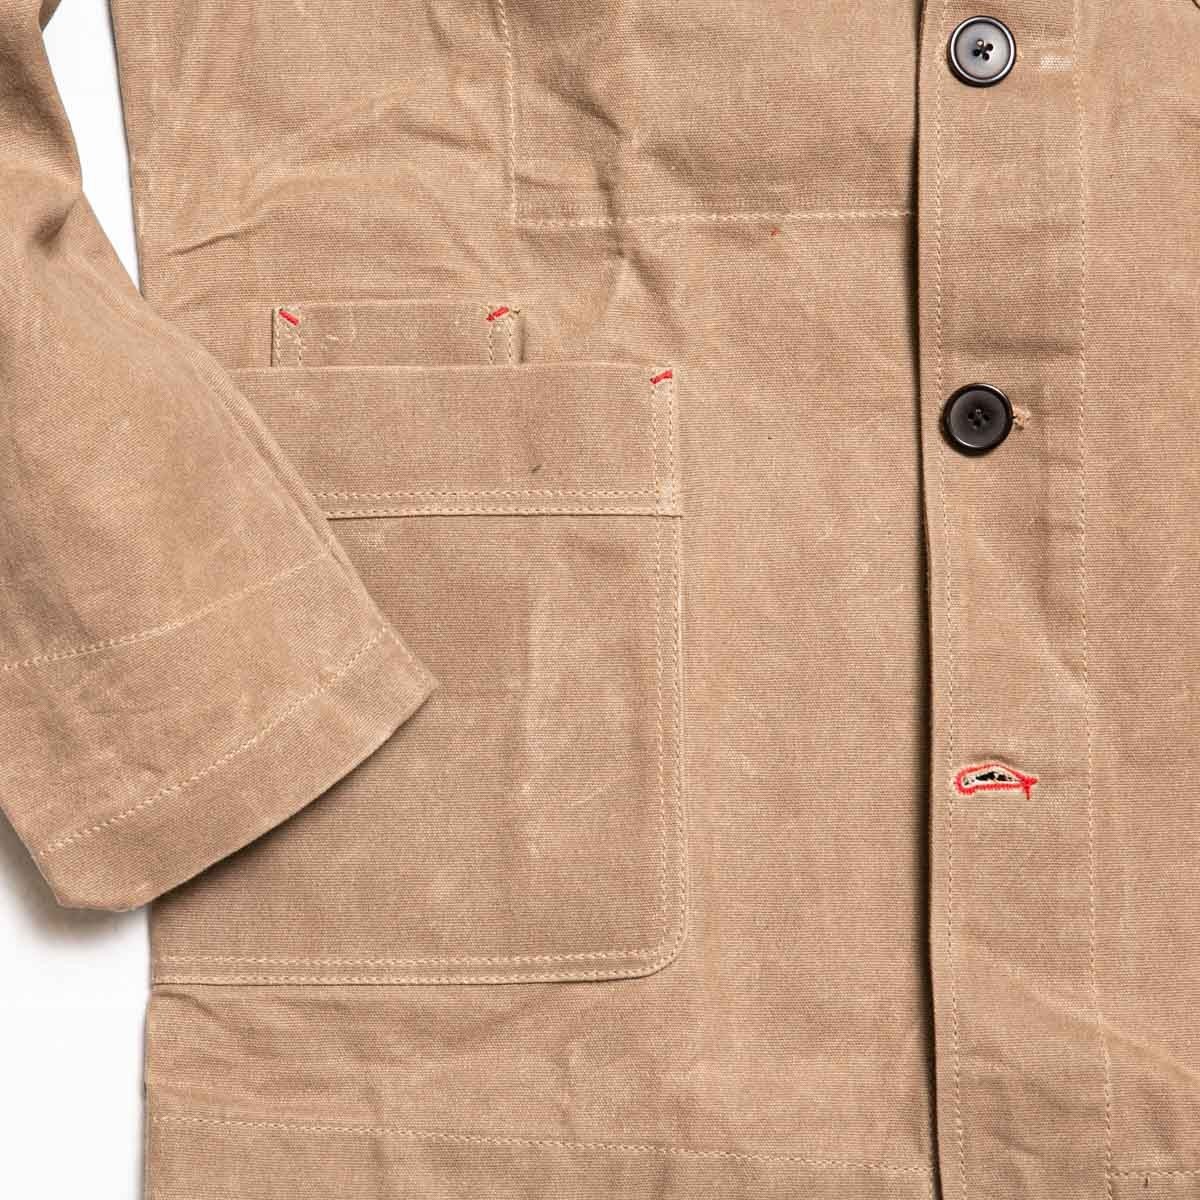 veste-worker-beige-toile-enduite-detail-poche